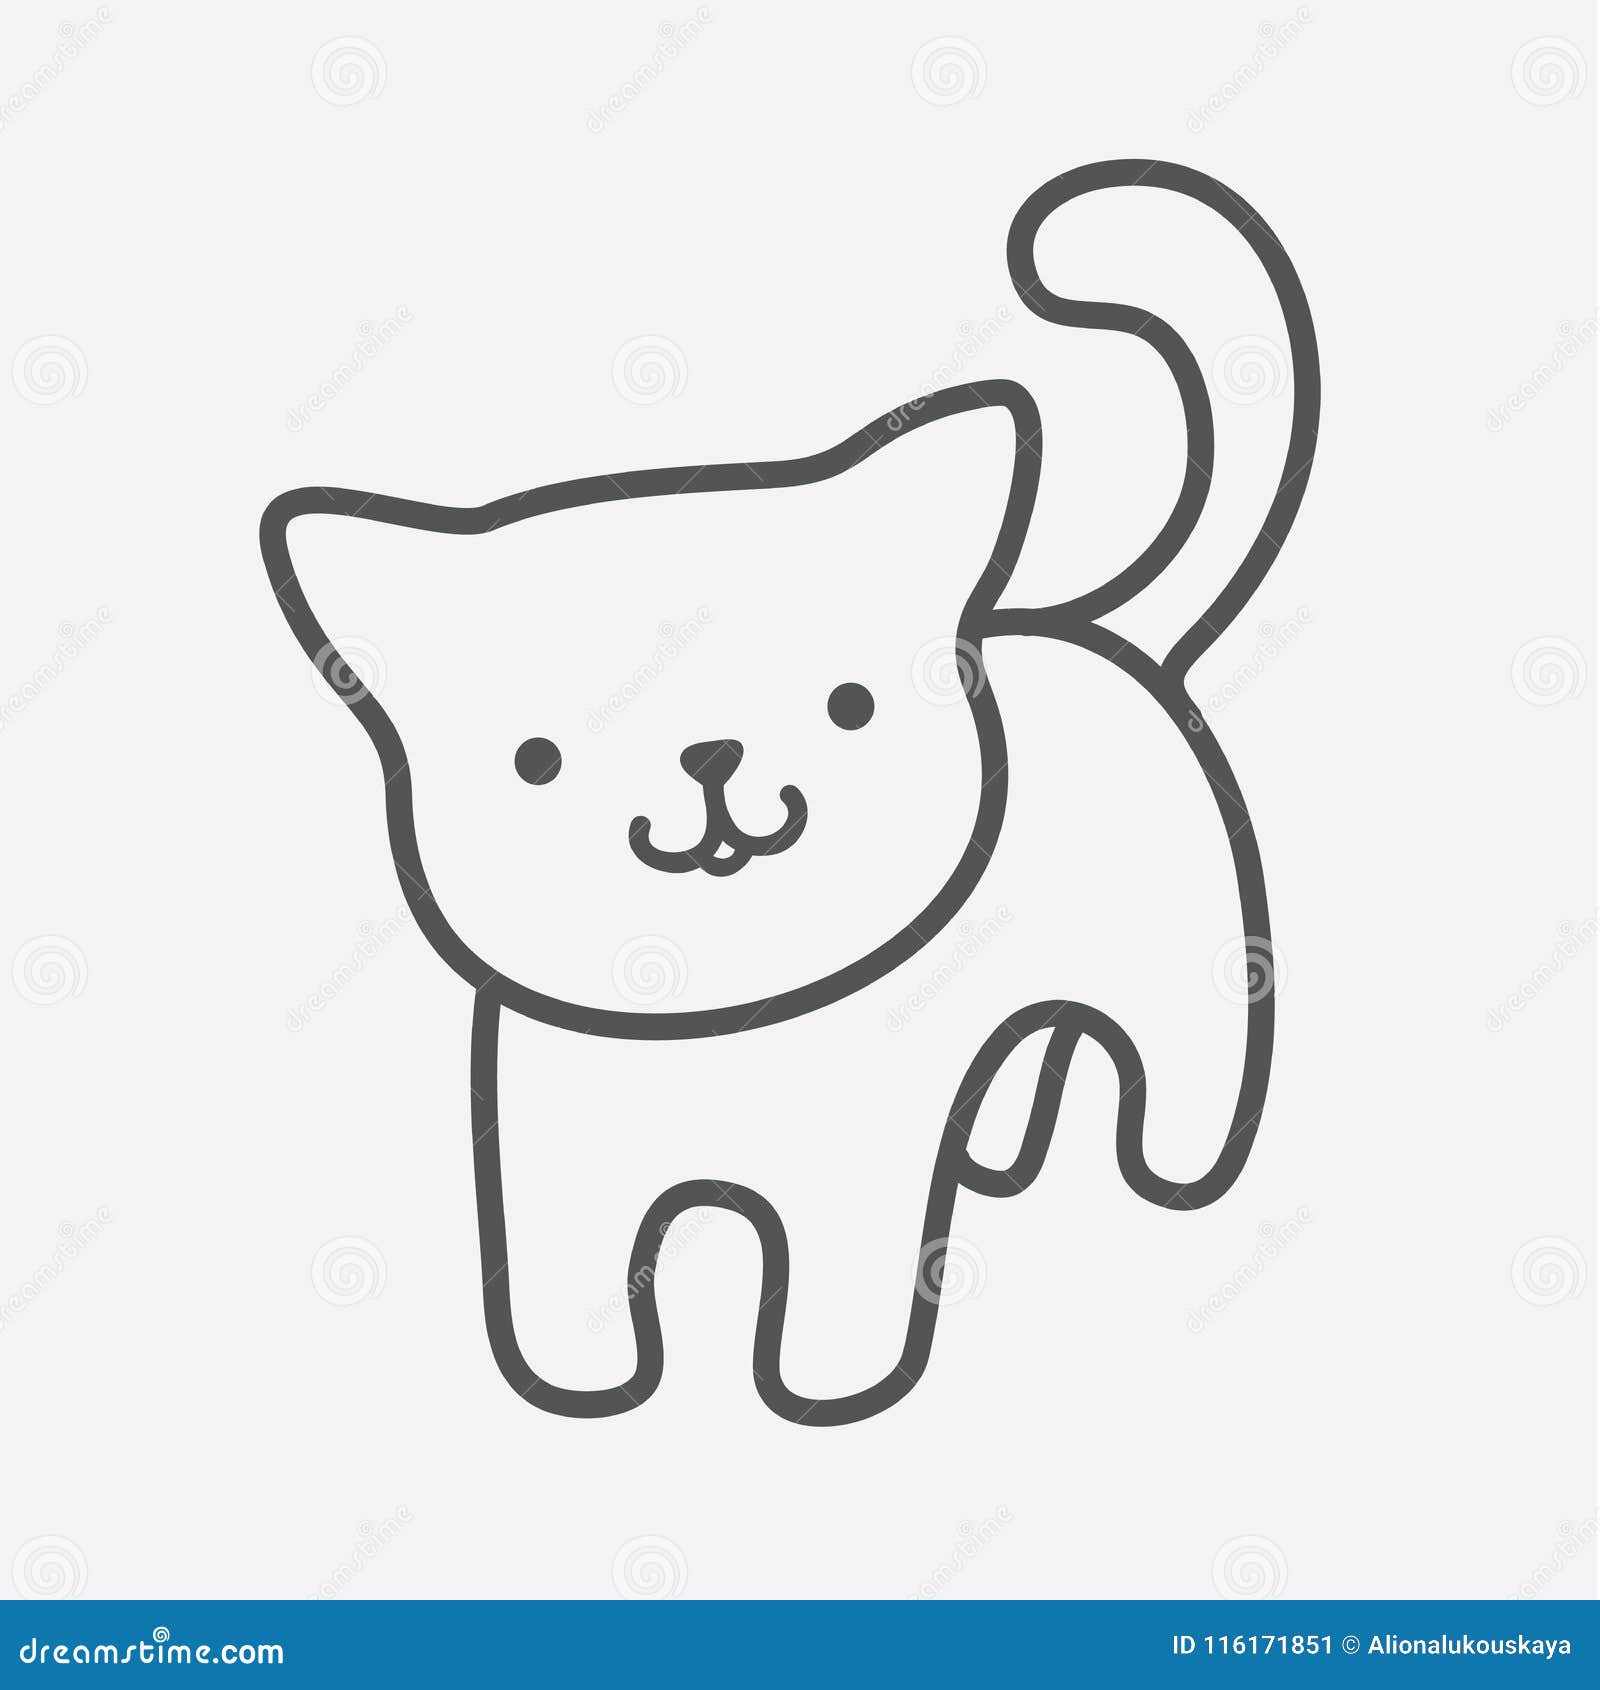 Cute cat icon line symbol. Isolated vector illustration of kitten